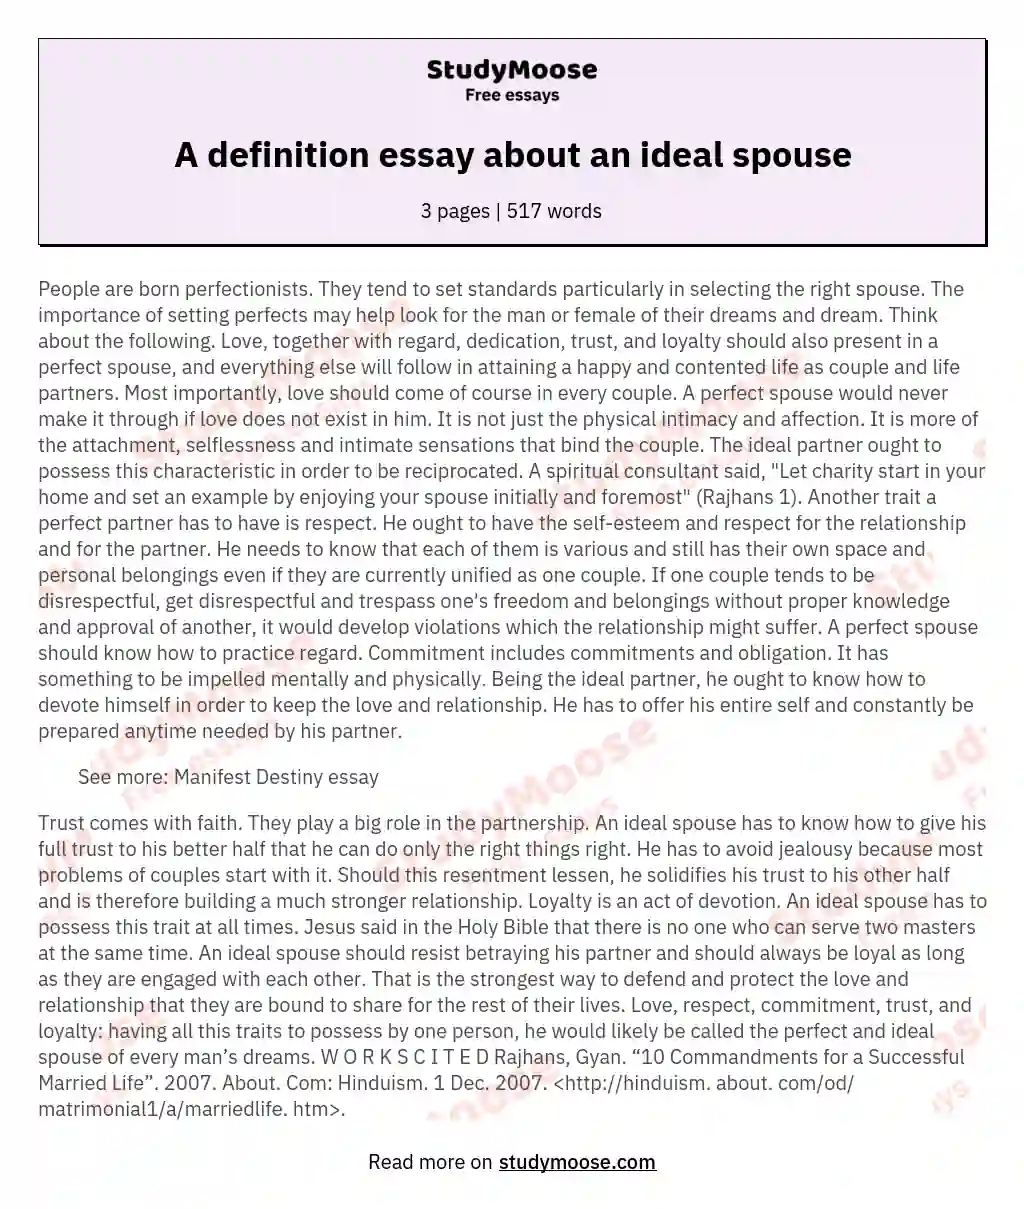 A definition essay about an ideal spouse